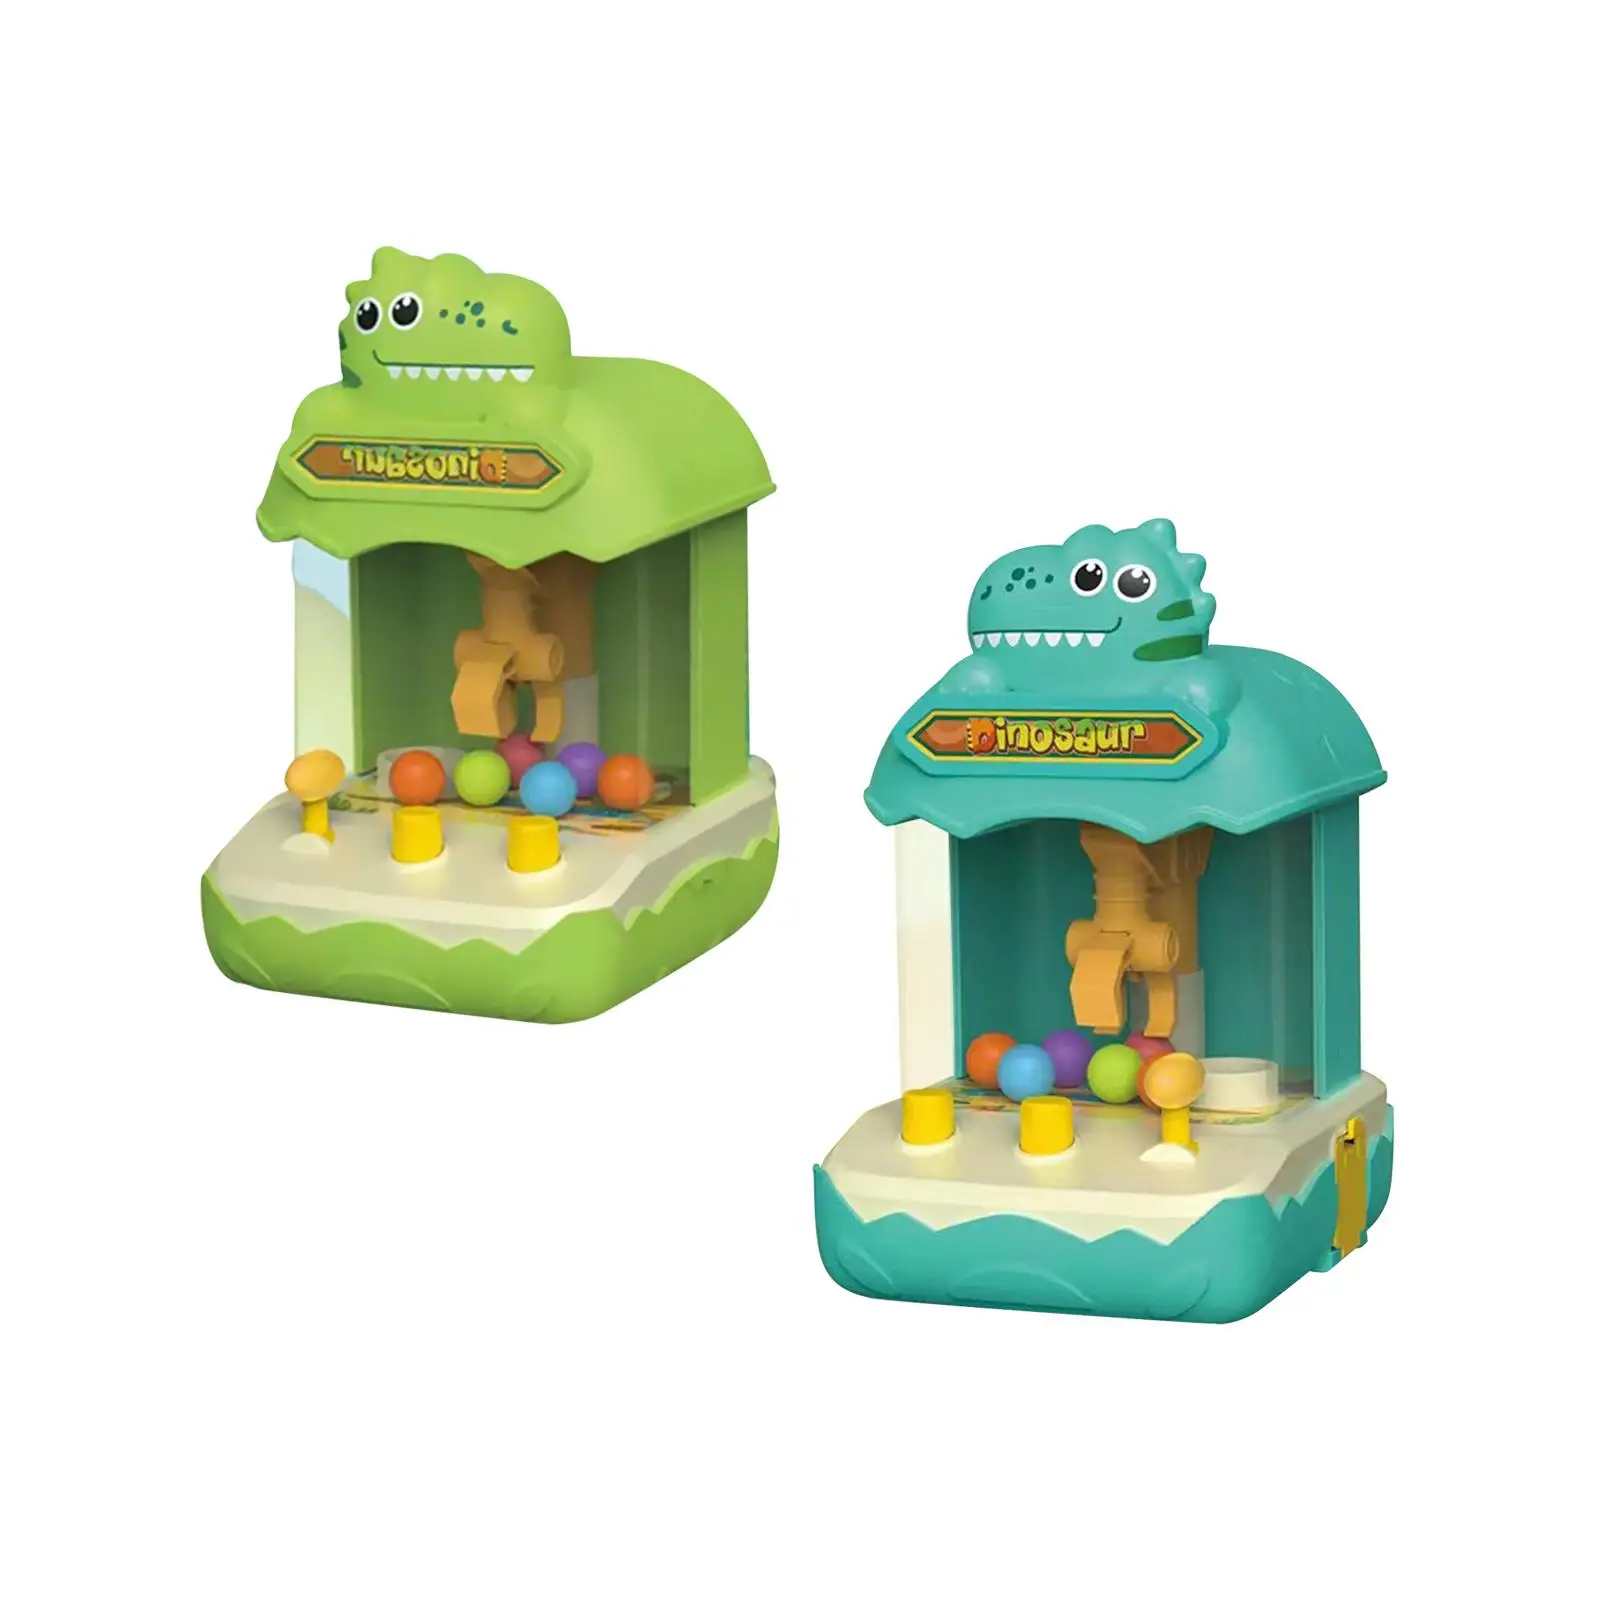 Claw Machine Candy Dispenser Toys Desktop Interactive Toys for Best Gifts Parent Child Interactive Children